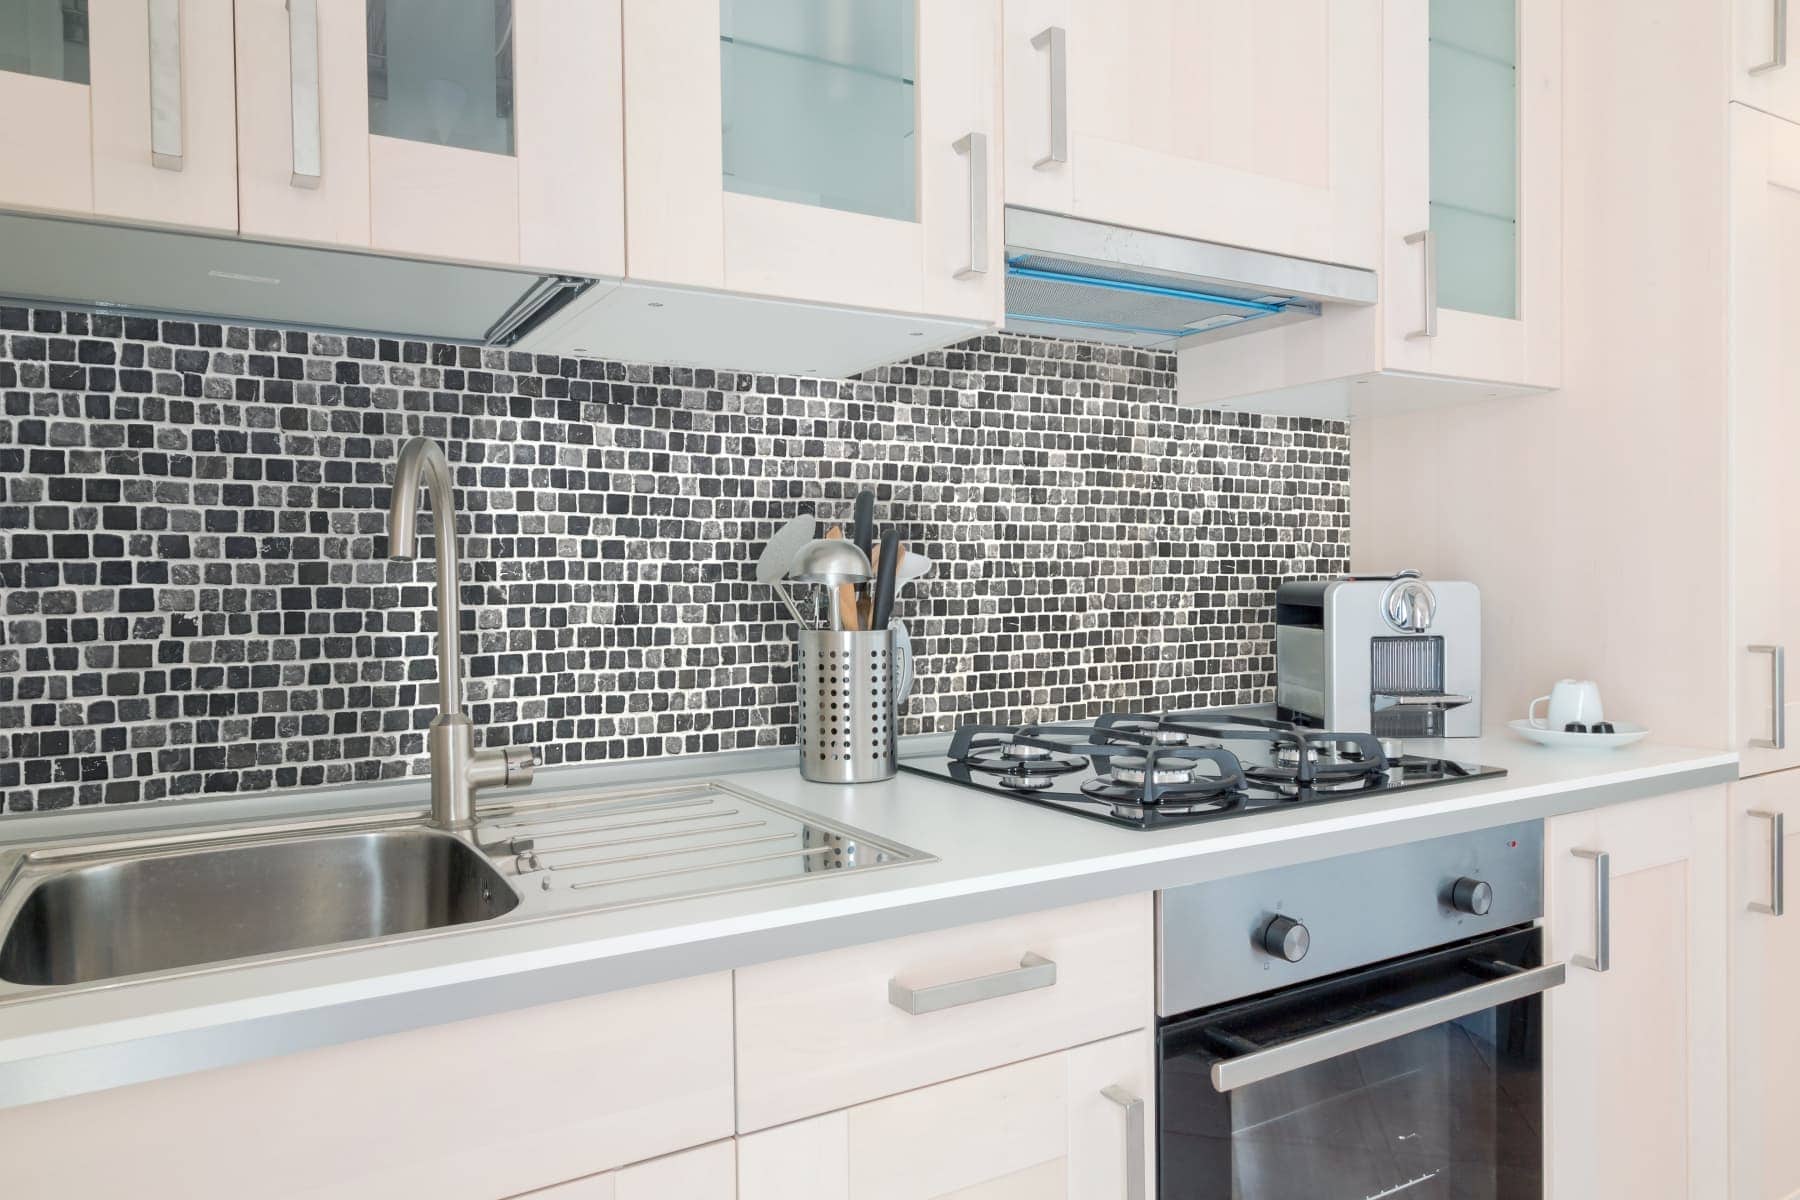 Stunning black and white kitchen with natural backsplash